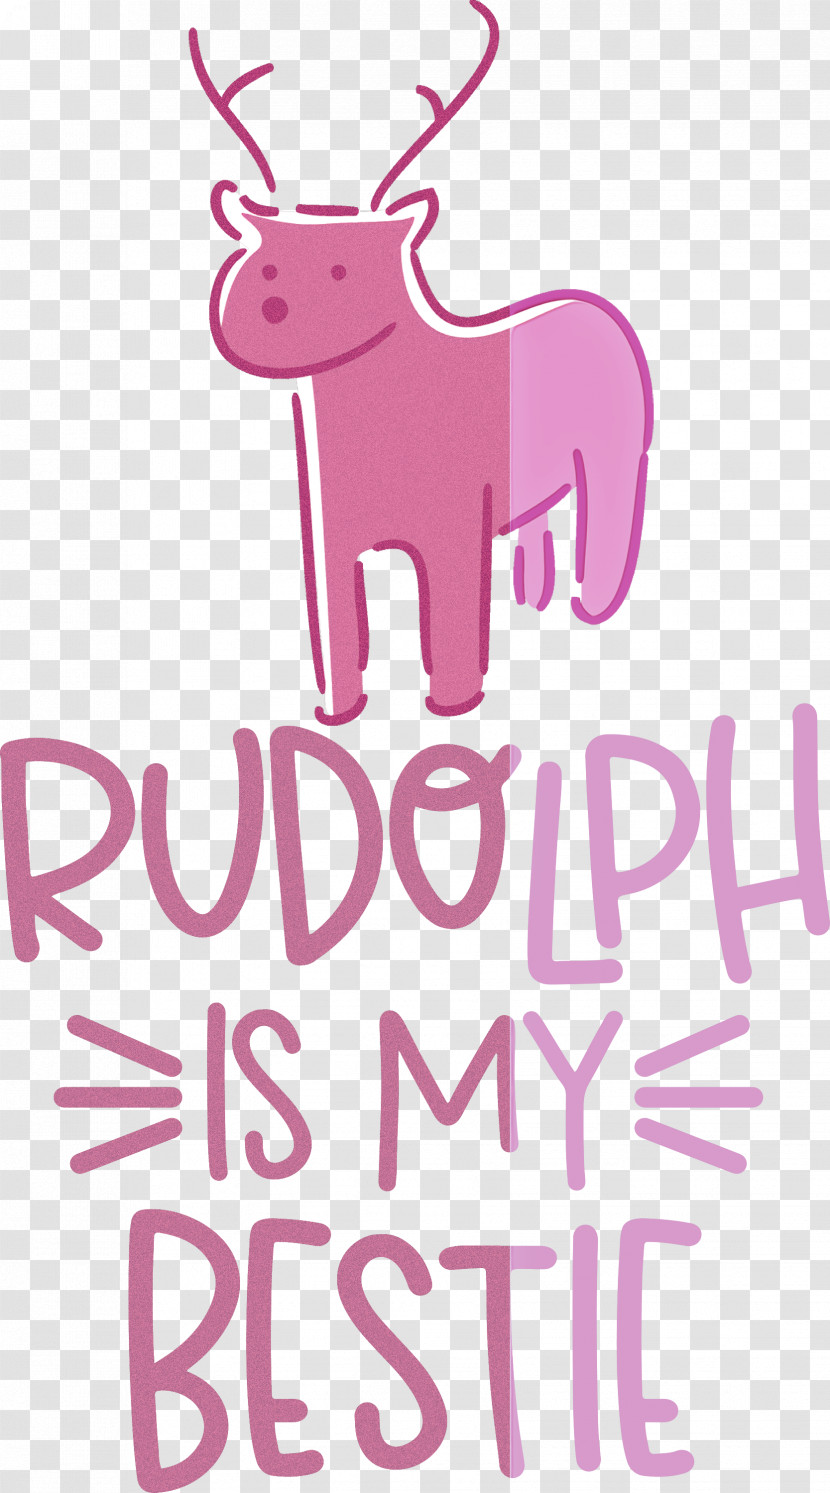 Rudolph Is My Bestie Rudolph Deer Transparent PNG